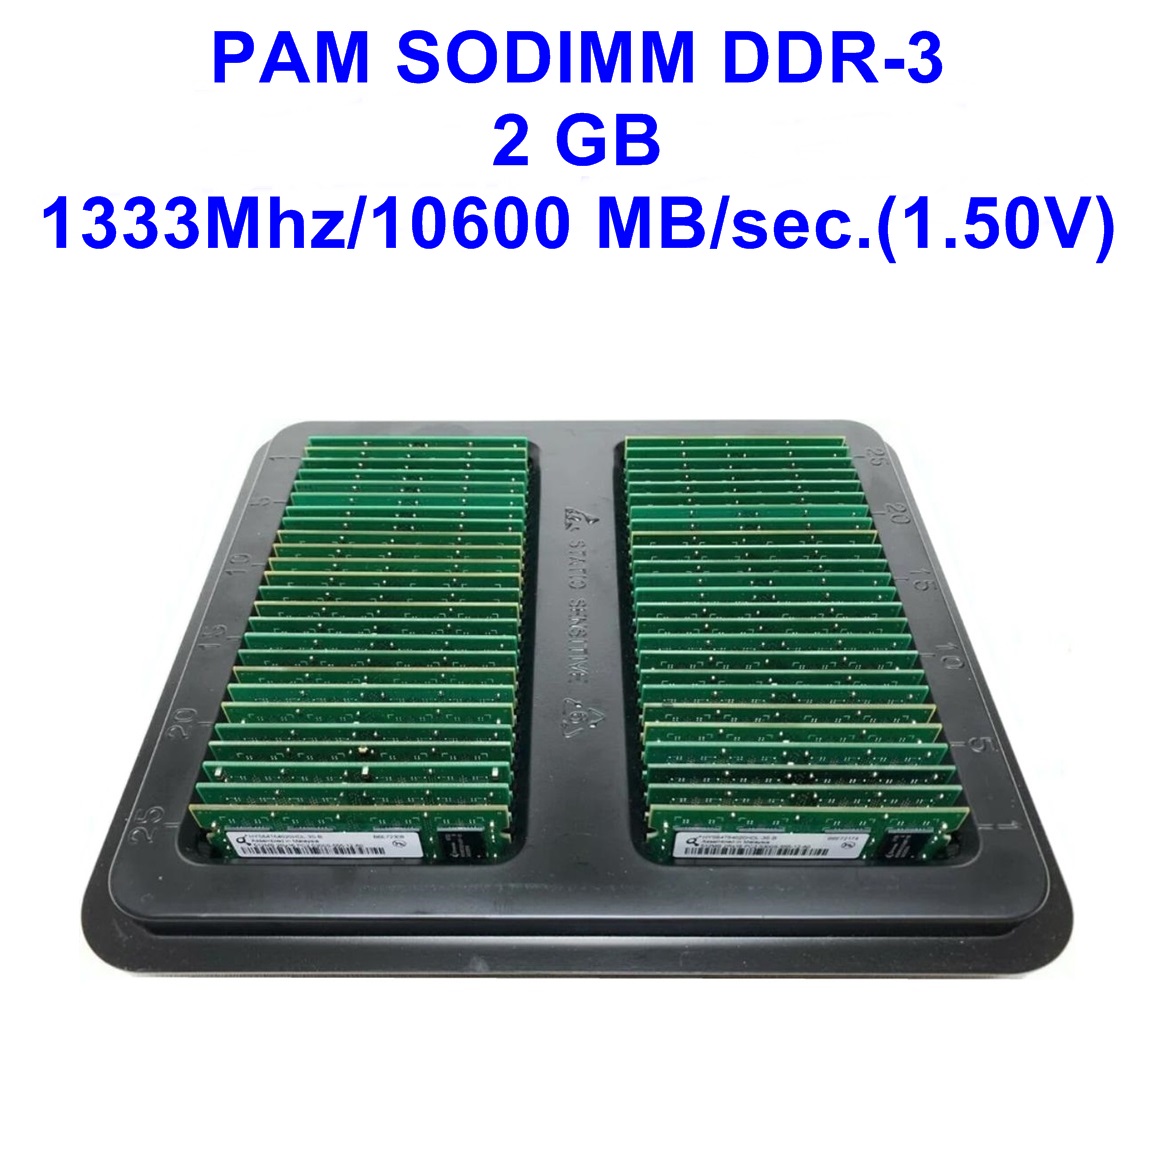 SODIMM DDR-3 2 GB 1333Mhz/10600 MB/sec.(1.50V)